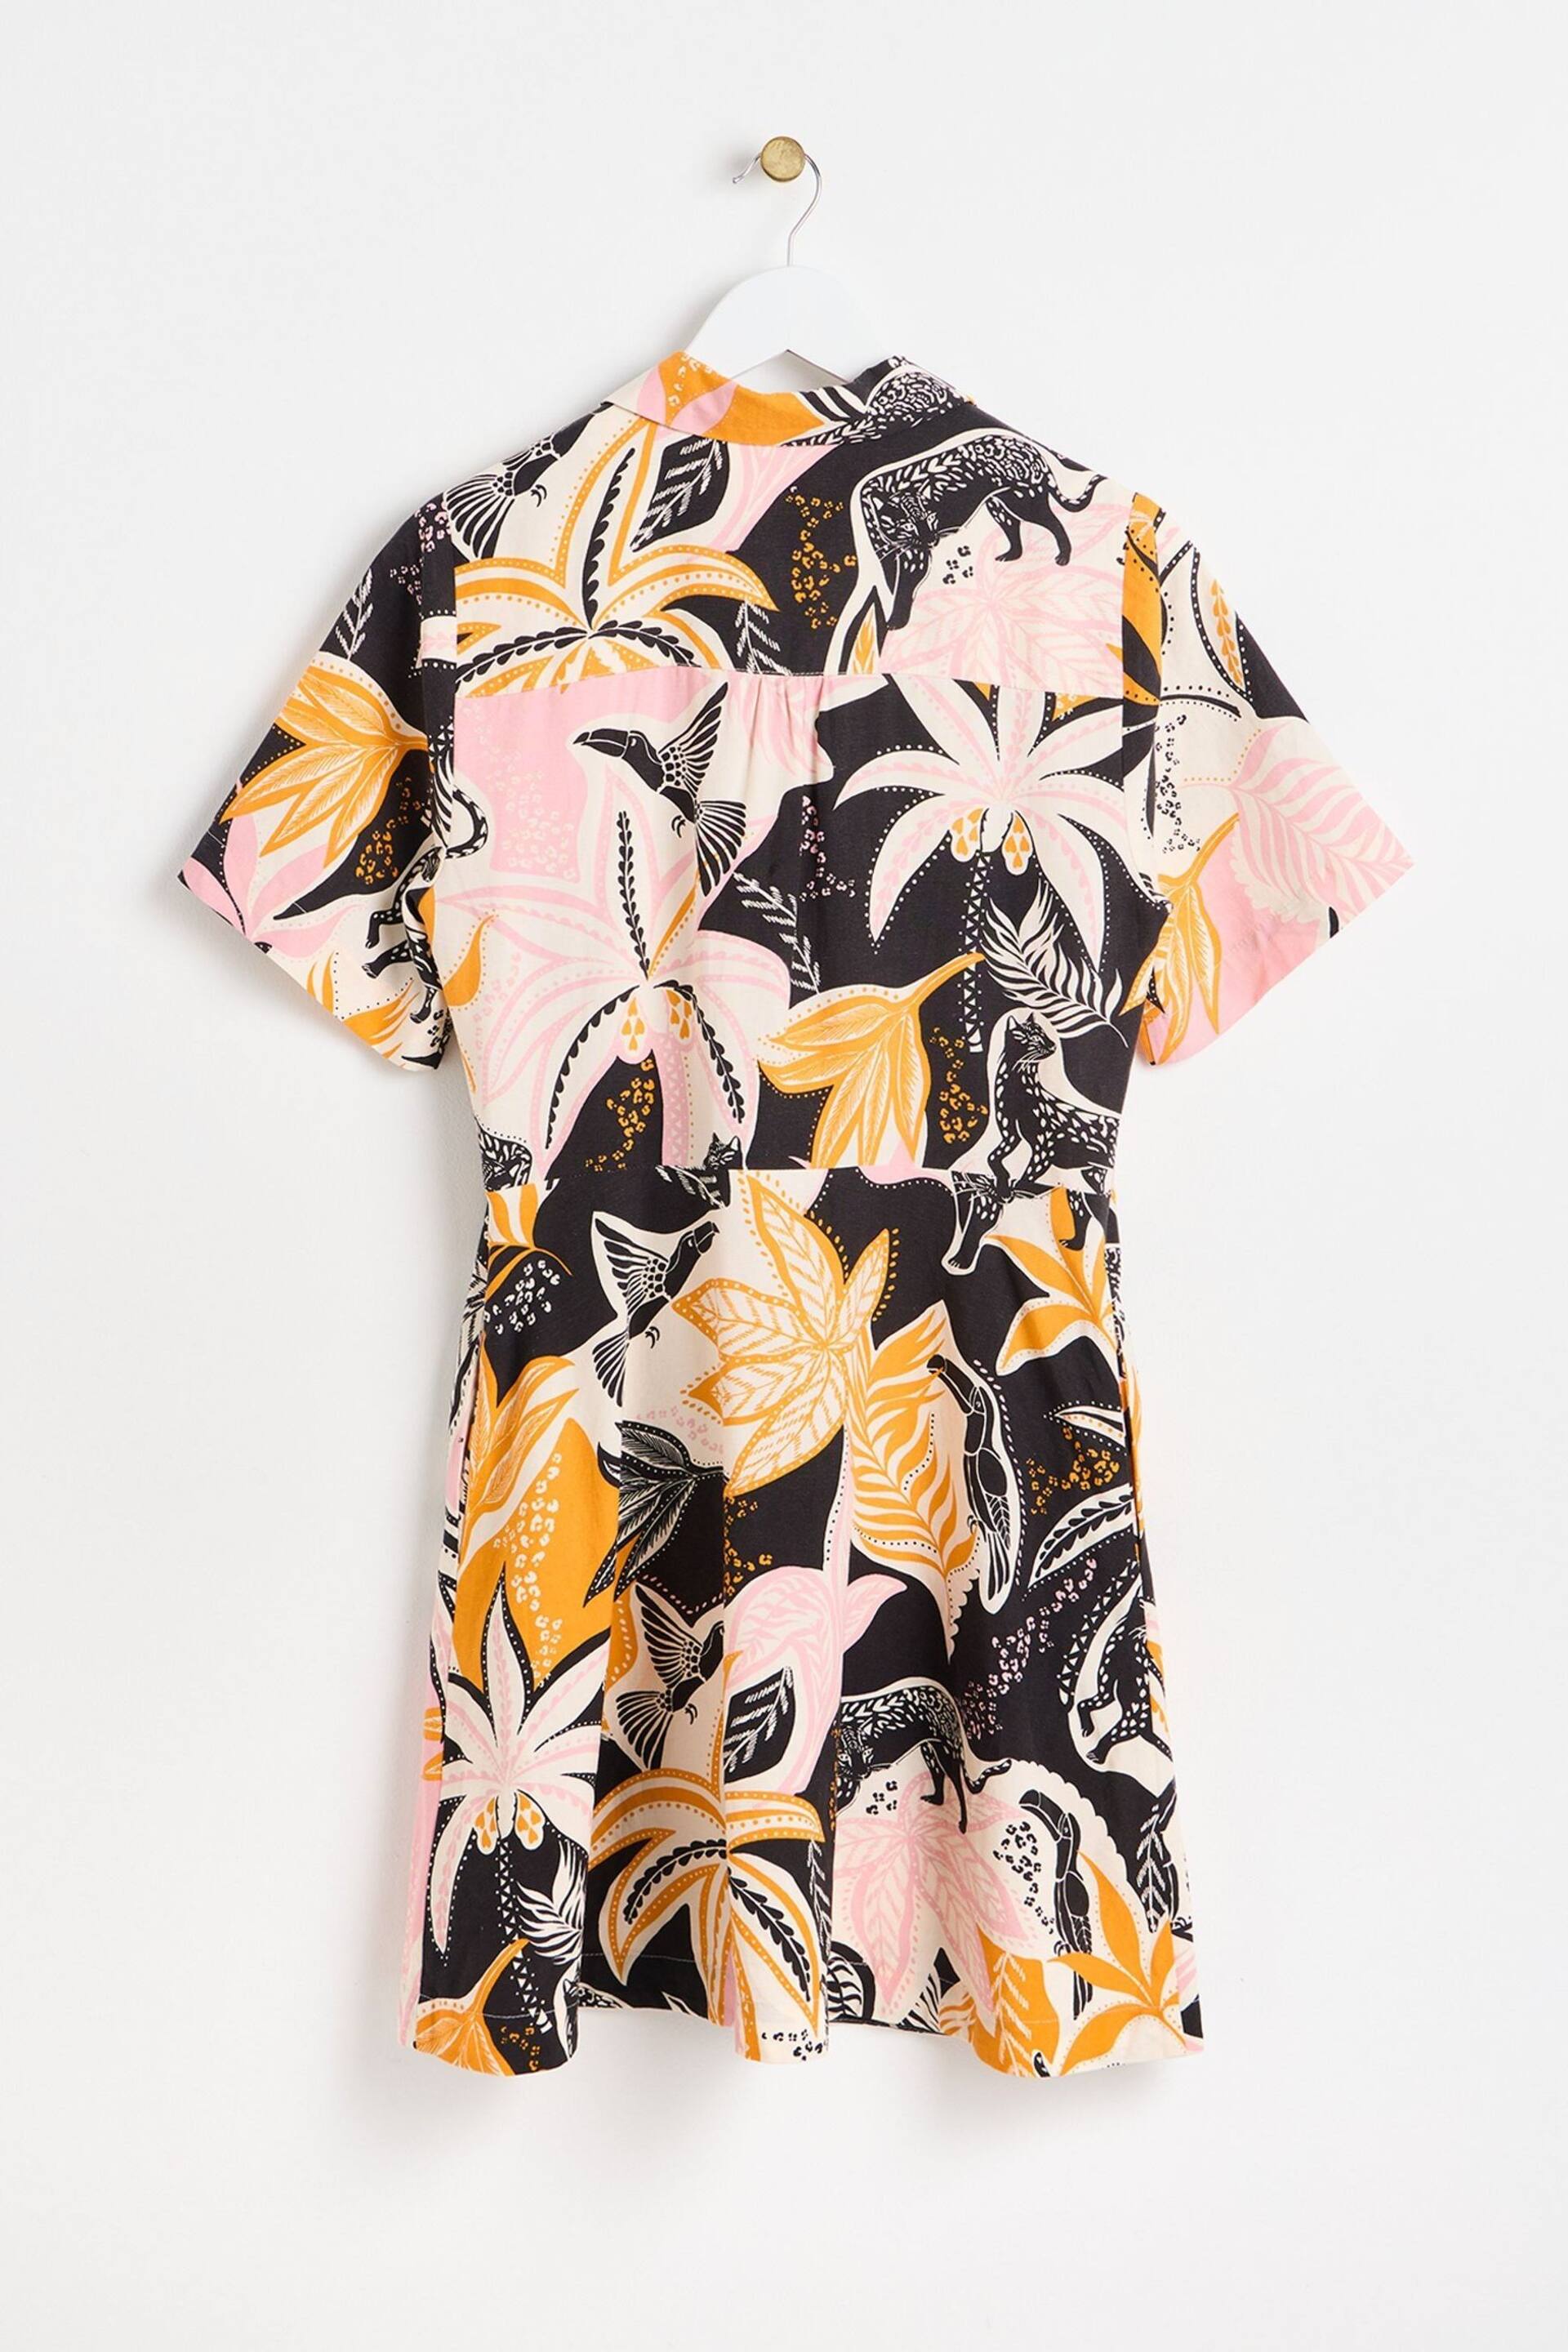 Oliver Bonas Pink And Orange Tropical Print Mini Black Shirt Dress - Image 4 of 8